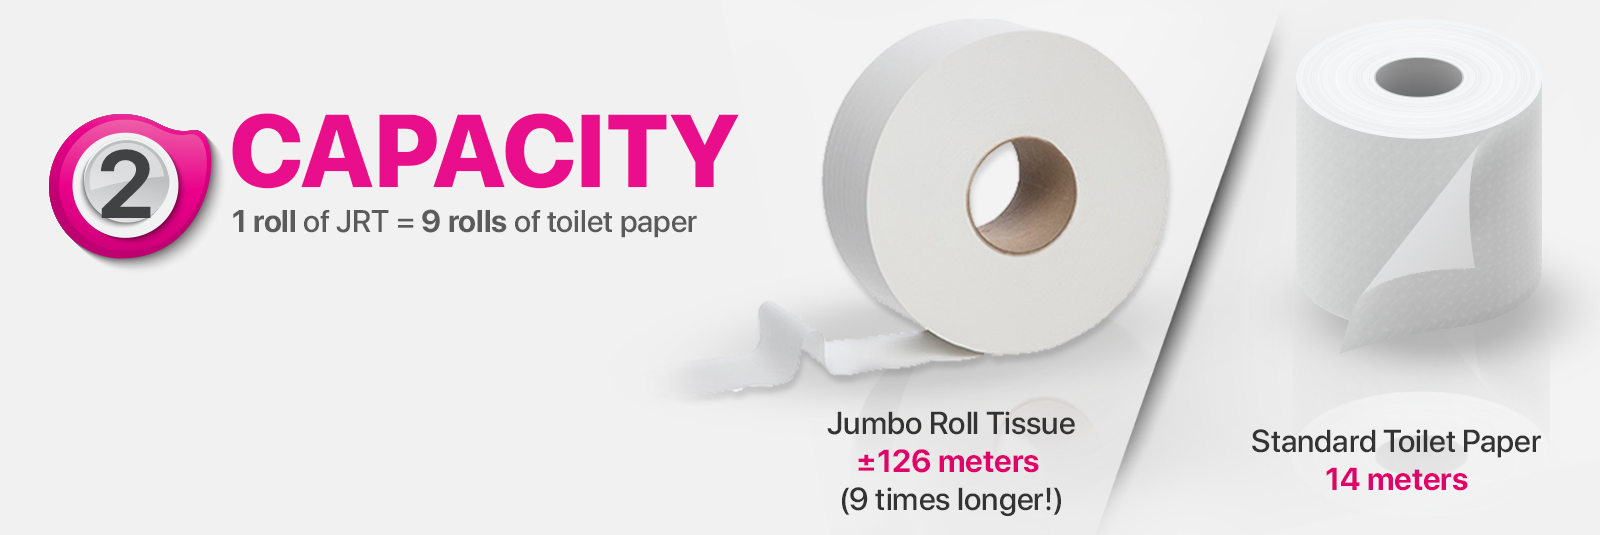 Capacity - 1 roll of JRT = 9 Rolls of toilet paper. Jumbo roll tissue 126 meters, standard toilet rolls 14 meters.